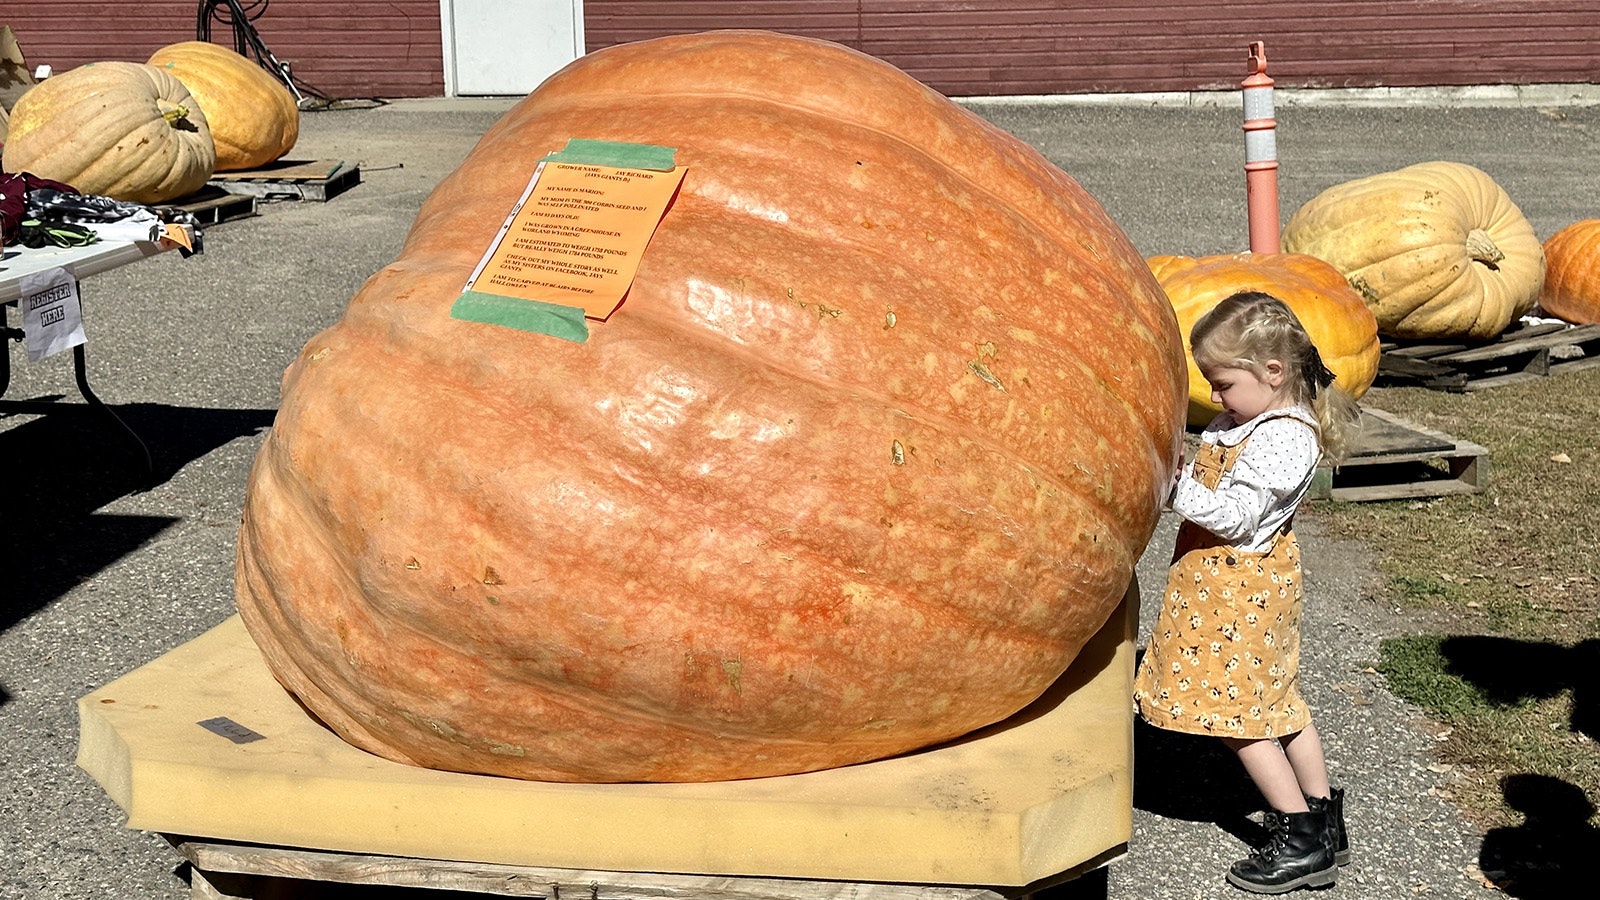 Huge pumpkin, tiny kid.